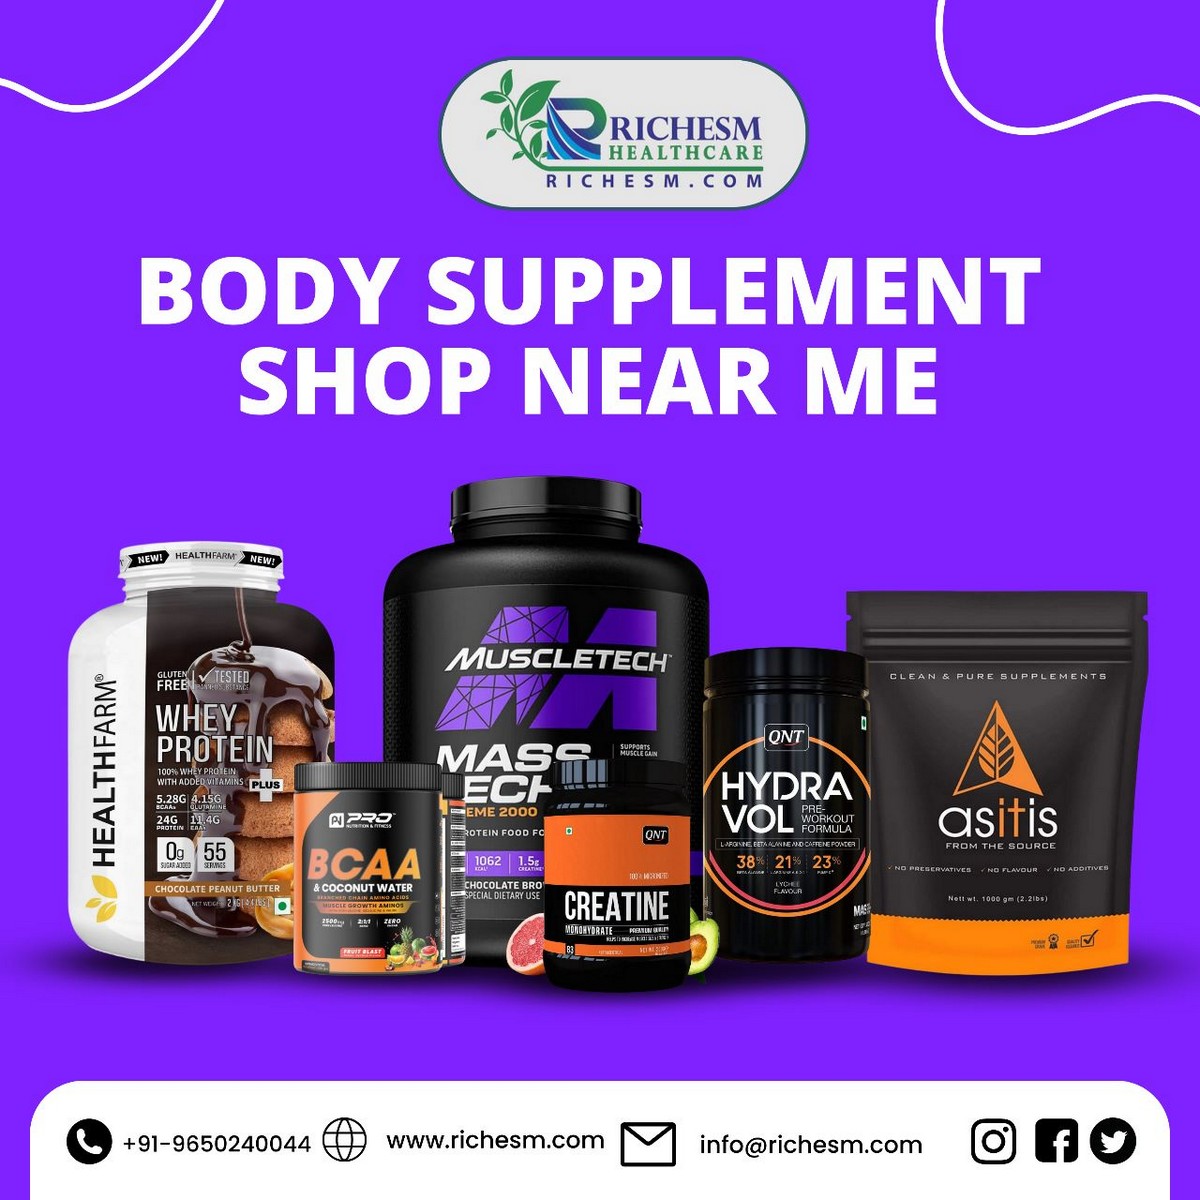 Find Online Your Body Supplement Shop Near Me Health and Nutrition Find Online Your Body Supplement Shop Near Me